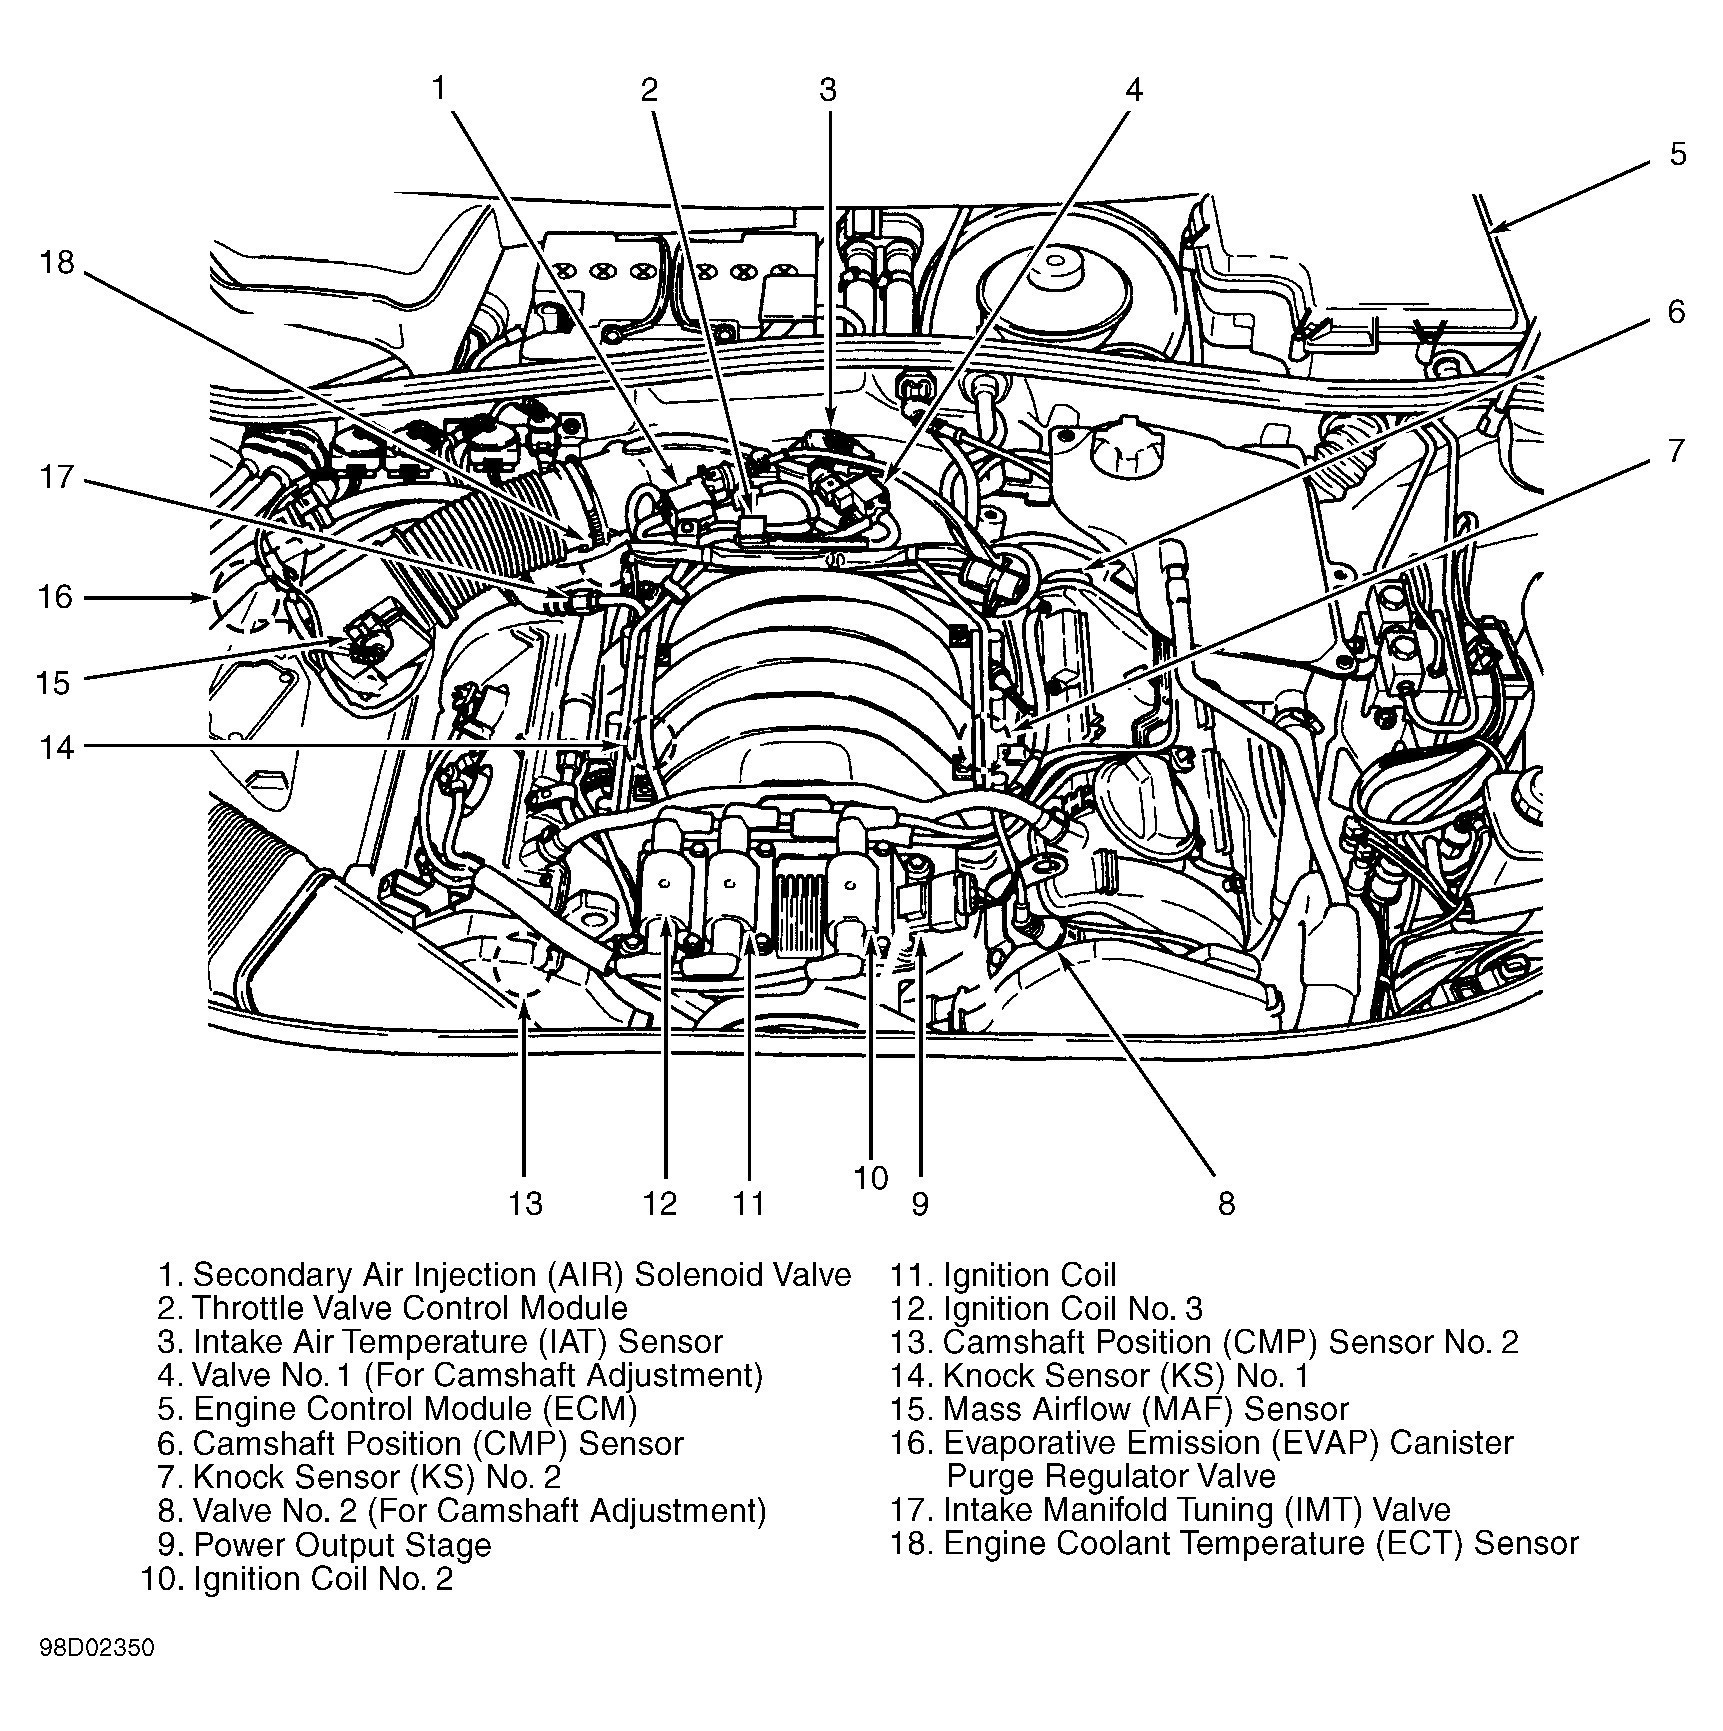 1999 ford Contour Engine Diagram 2000 ford Contour Transmission Diagram Simple Guide About Of 1999 ford Contour Engine Diagram